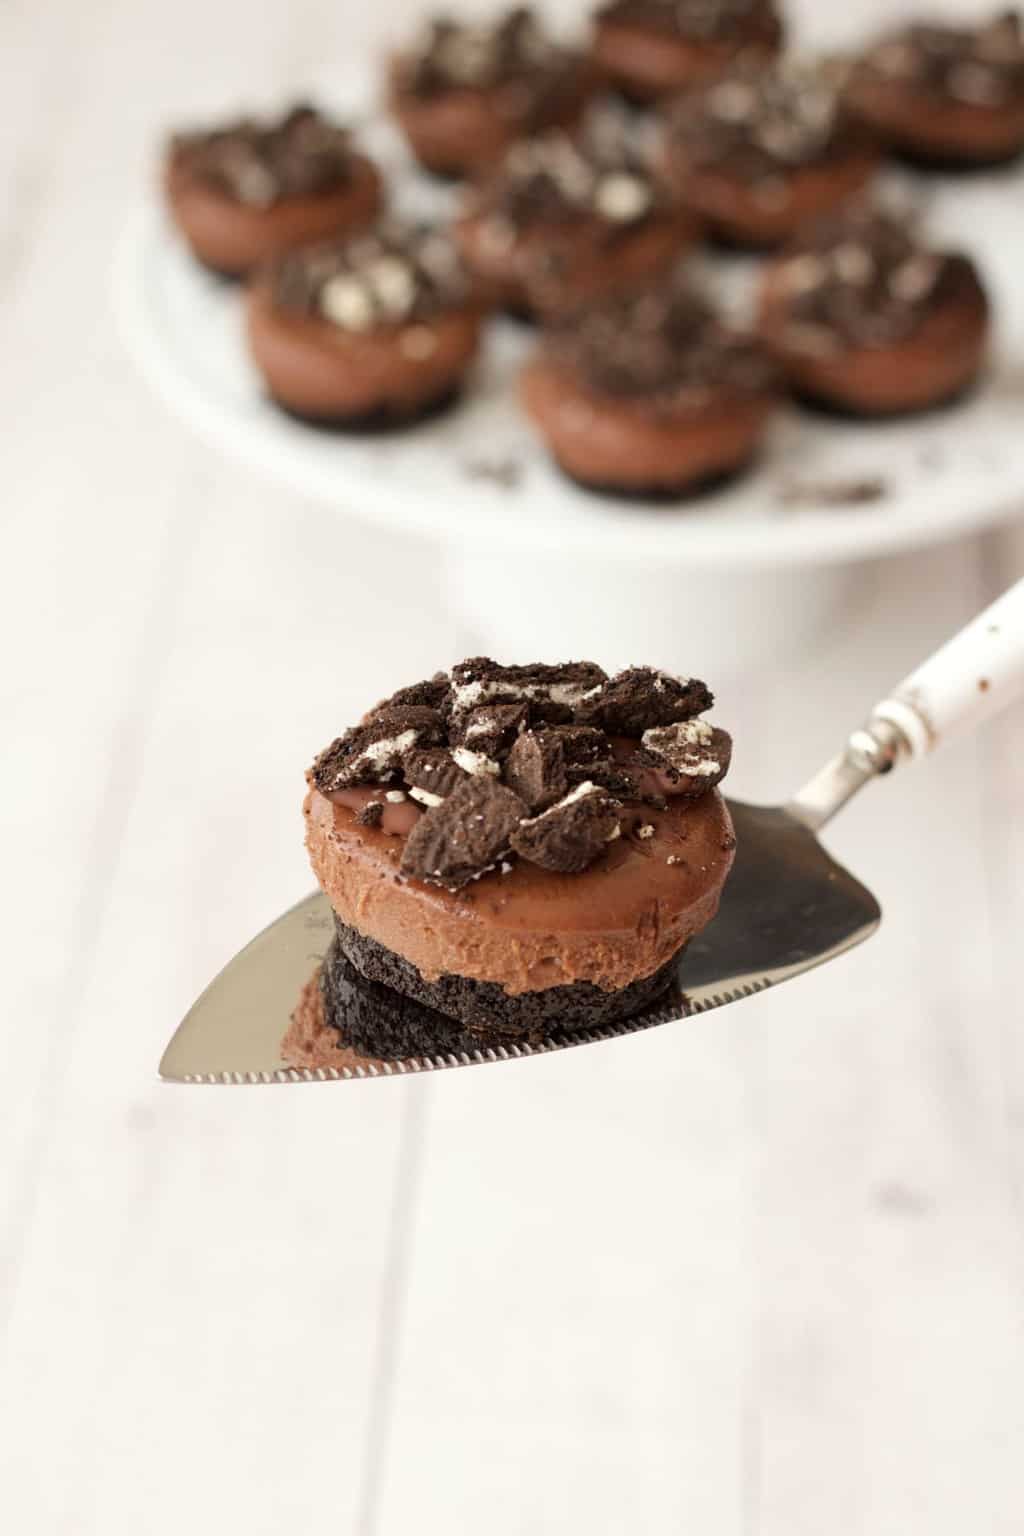 Mini Vegan Chocolate Cheesecakes #vegan #lovingitvegan #cheesecakes #dezert #dairyfree #Oreos